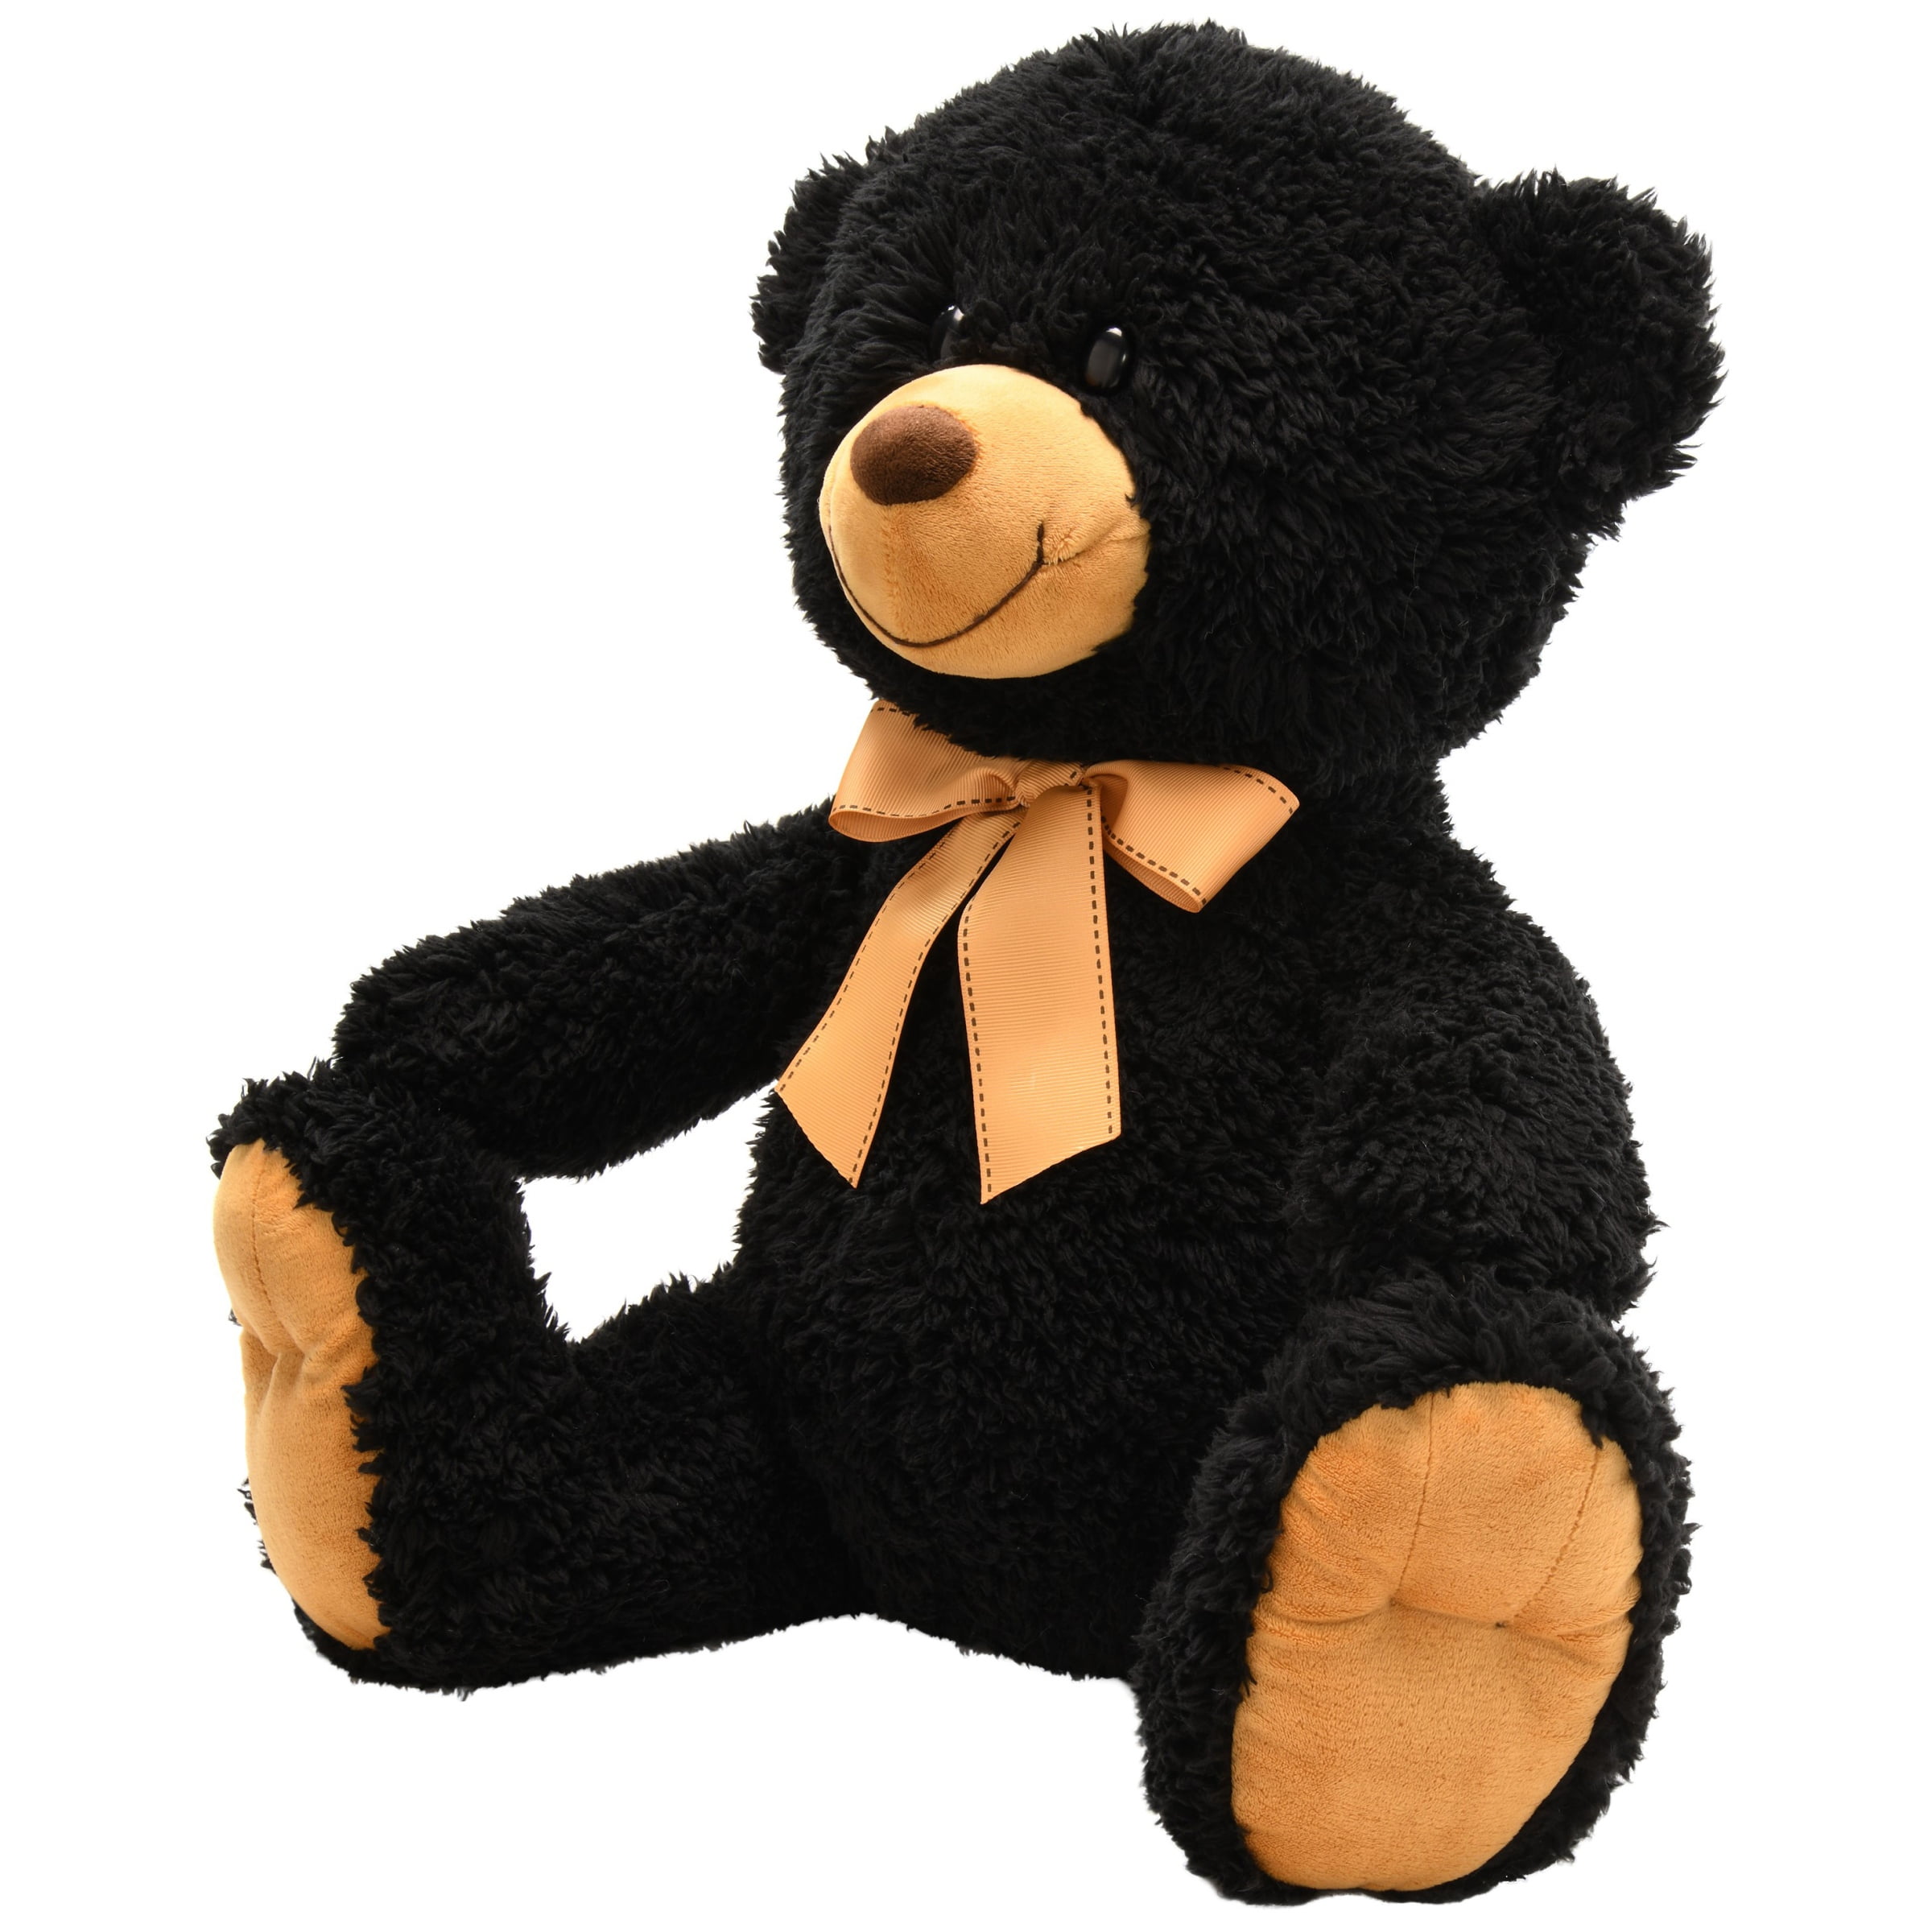 black teddy bear pics